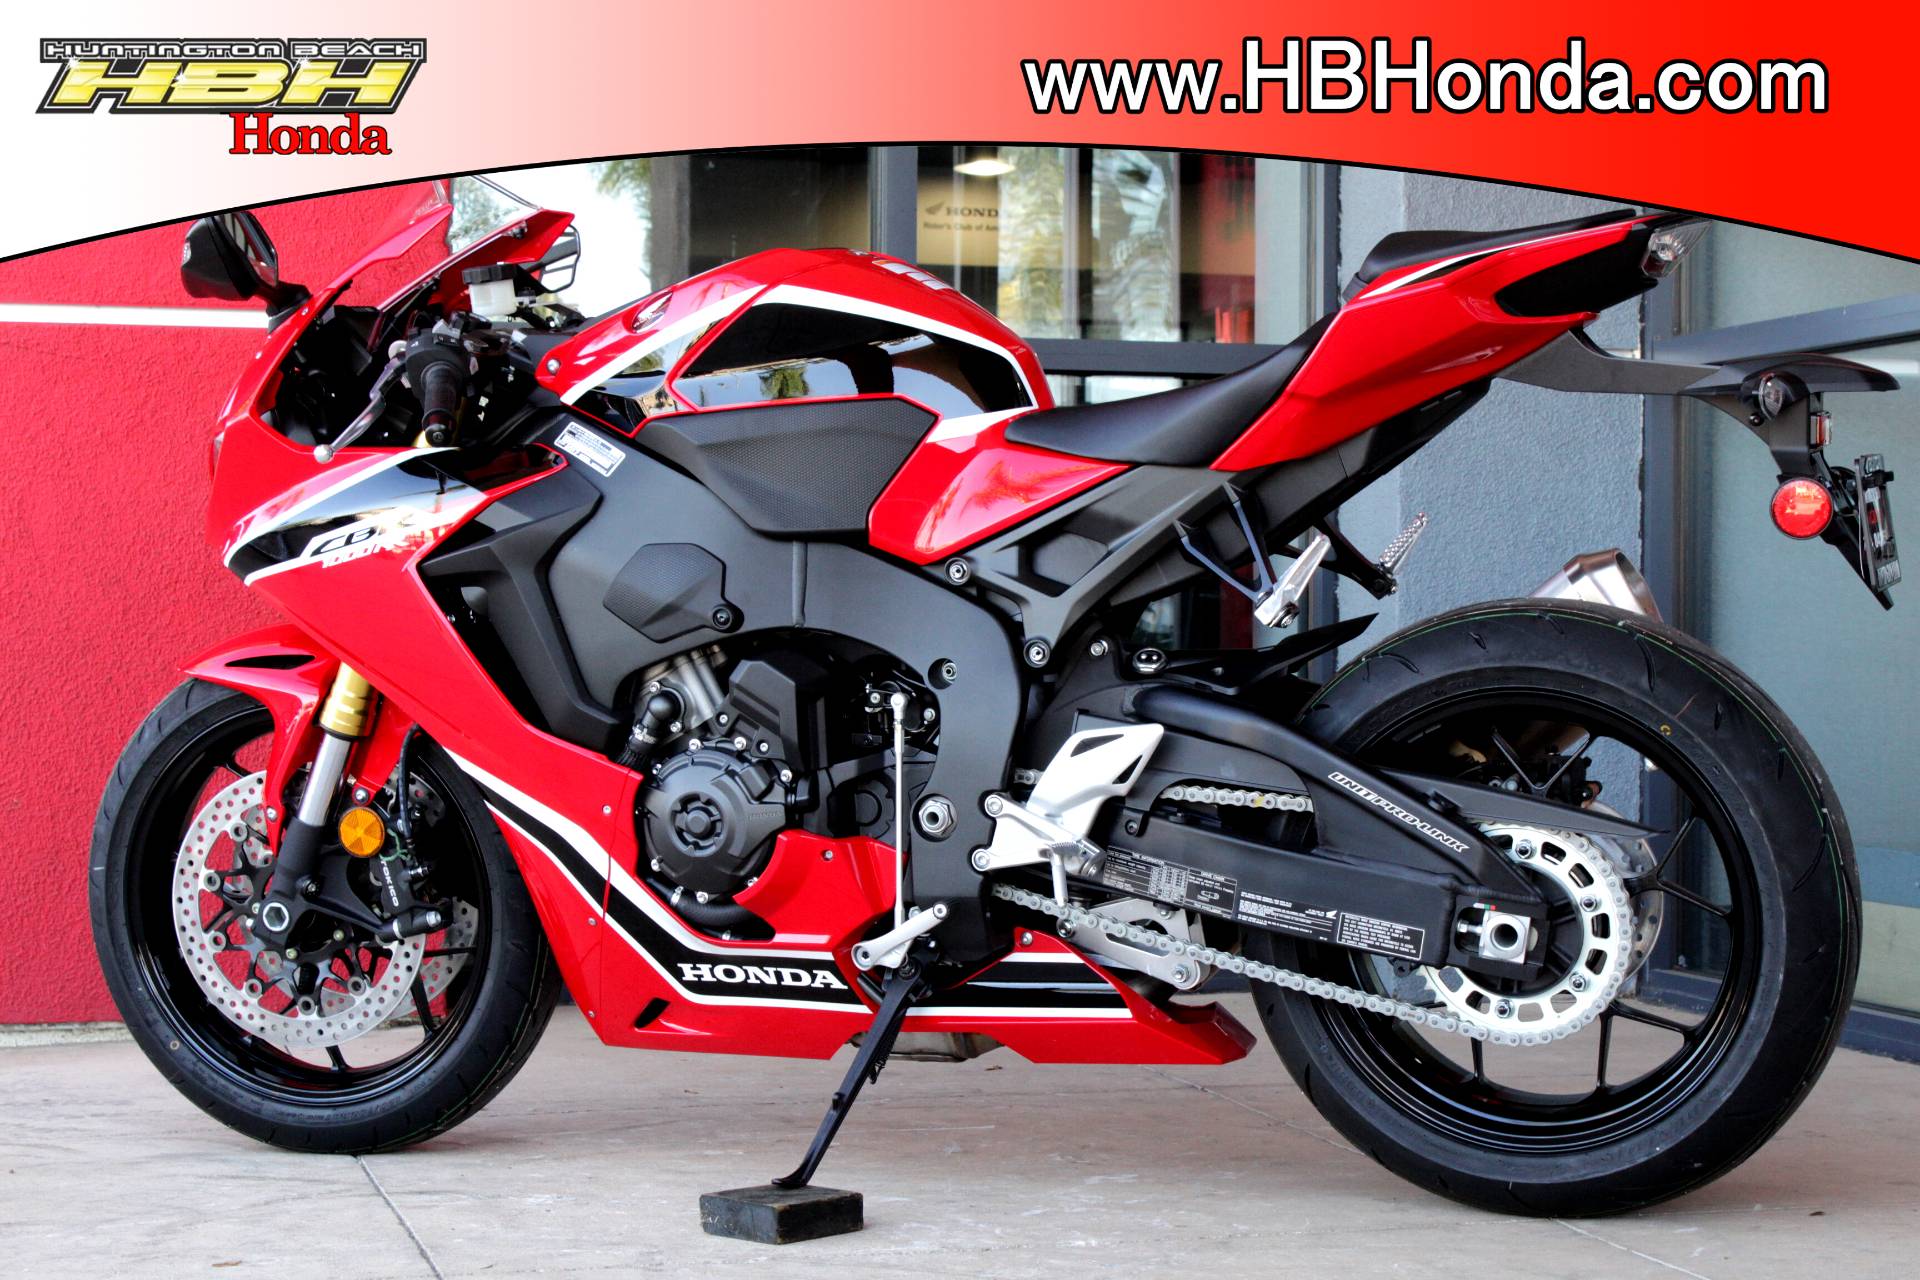 New Honda Cbr1000rr For Sale 18 Grand Prix Red Motorcycles In Huntington Beach Ca Huntington Beach Honda M25 0360